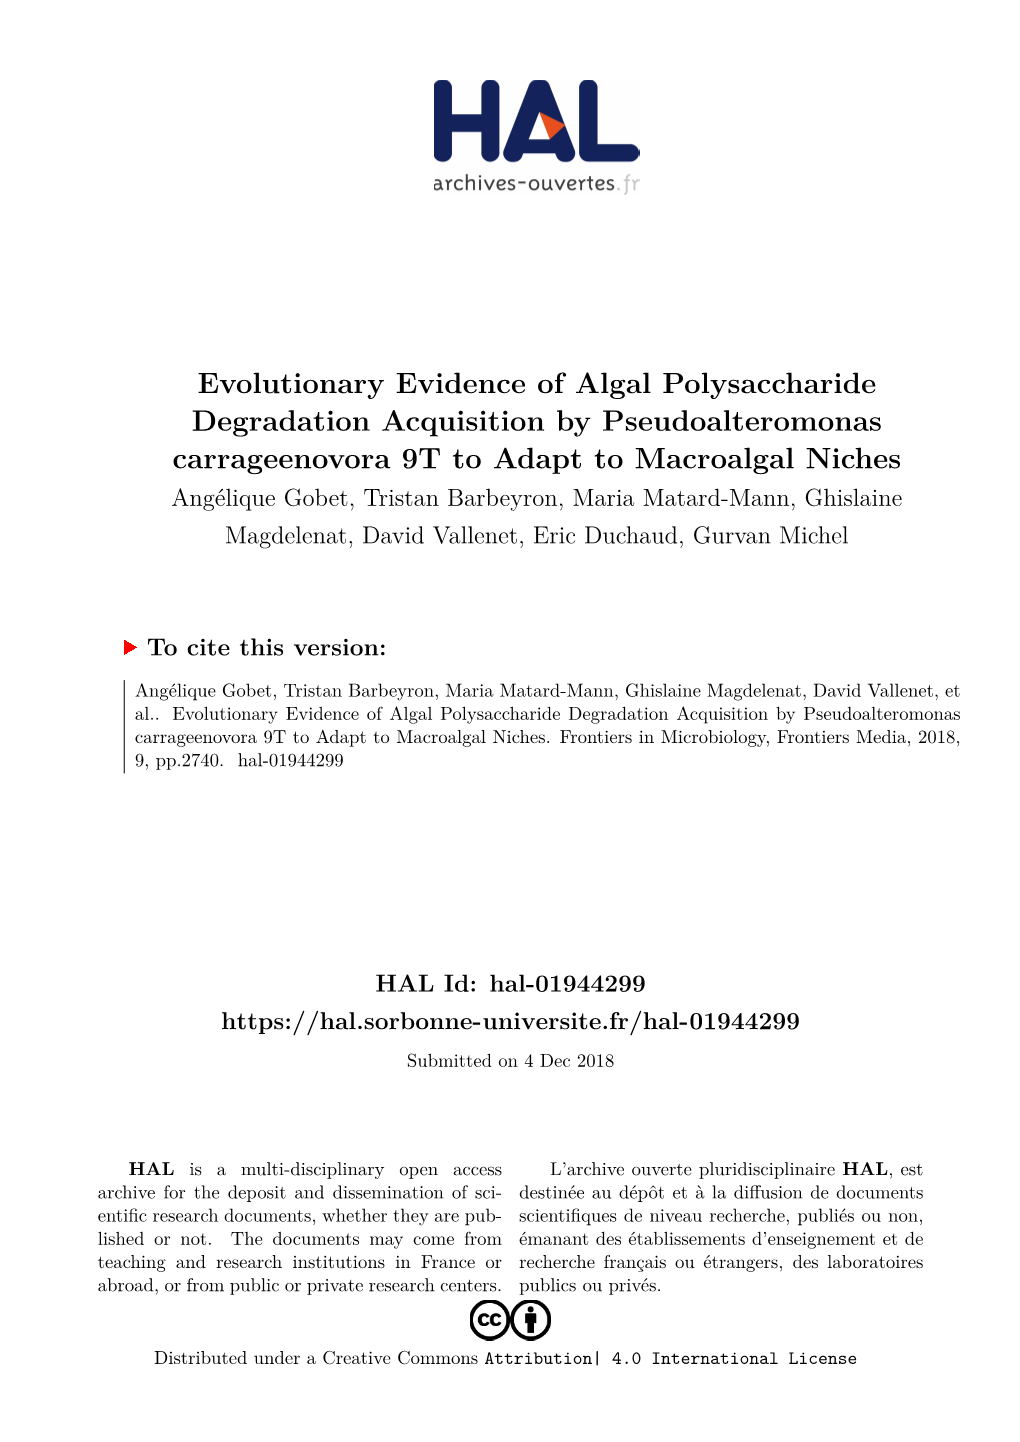 Evolutionary Evidence of Algal Polysaccharide Degradation